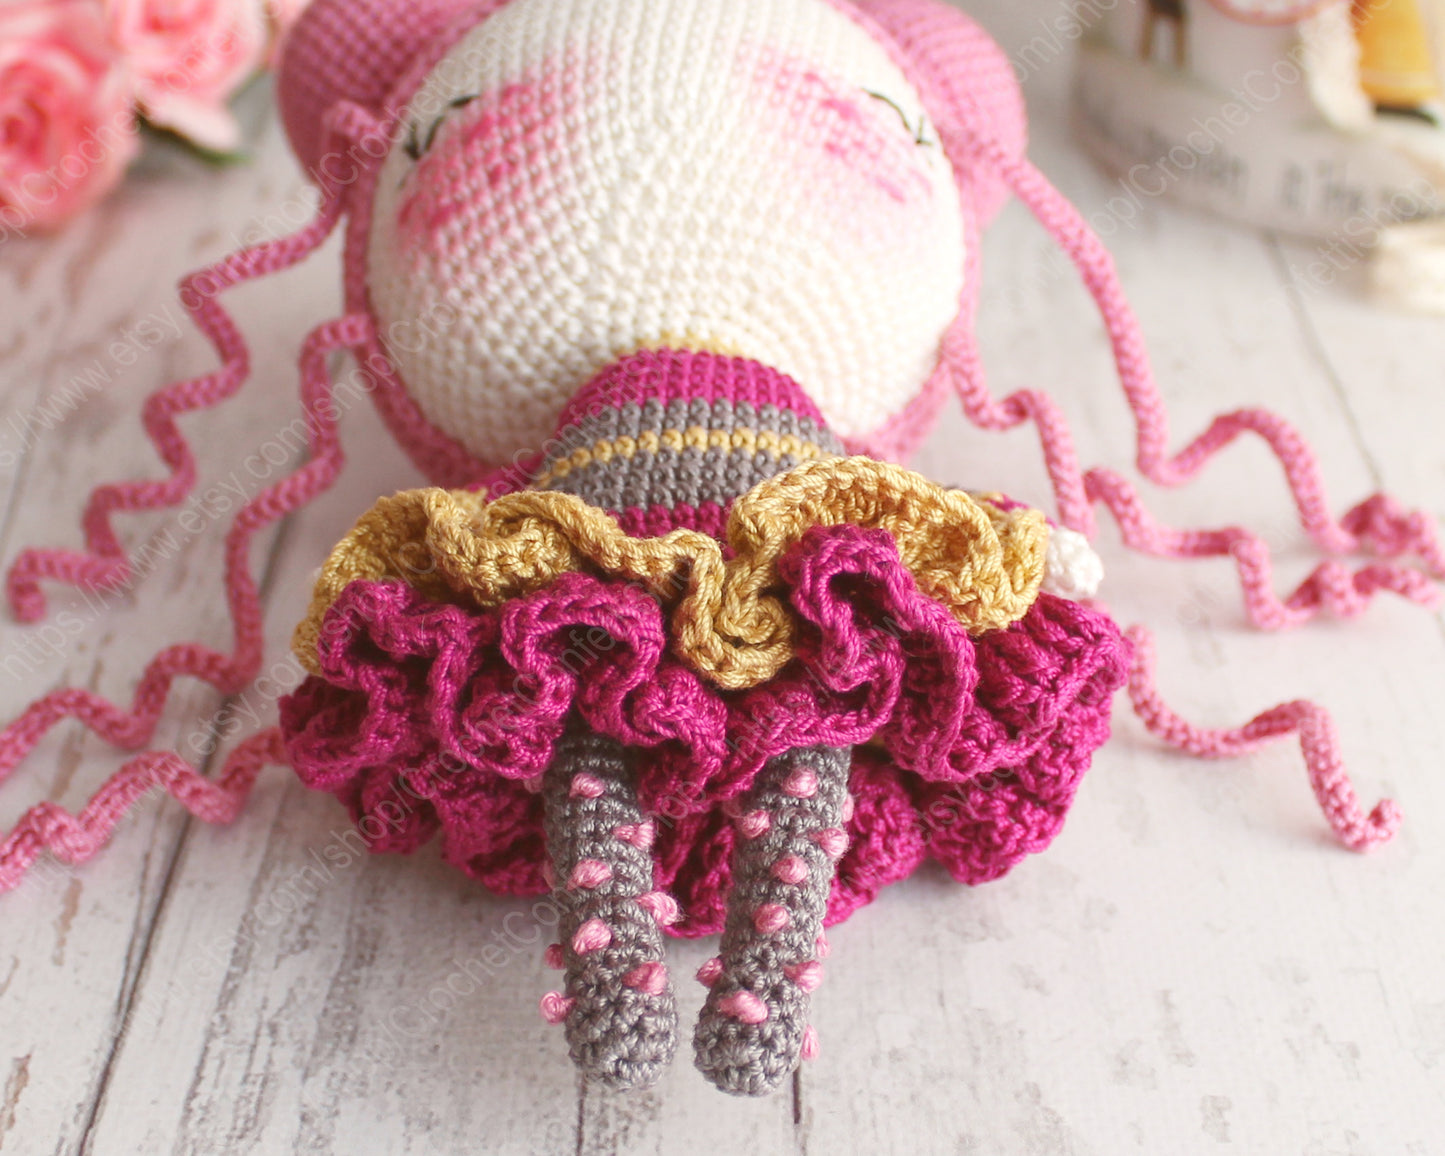 PDF SET Two Amigurumi Patterns, Amigurumi Doll, Amigurumi Little Sheep, DIY Doll, Stuffed Toy, Crochet Gift Idea